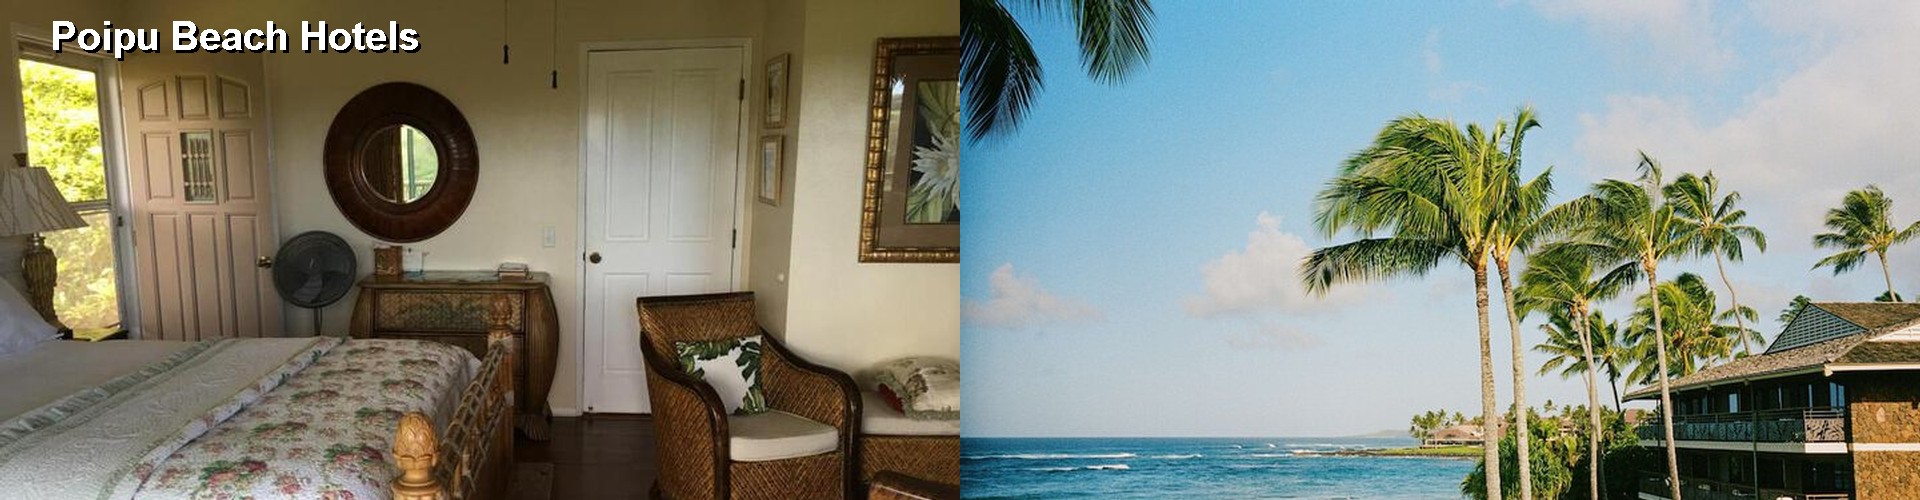 5 Best Hotels near Poipu Beach